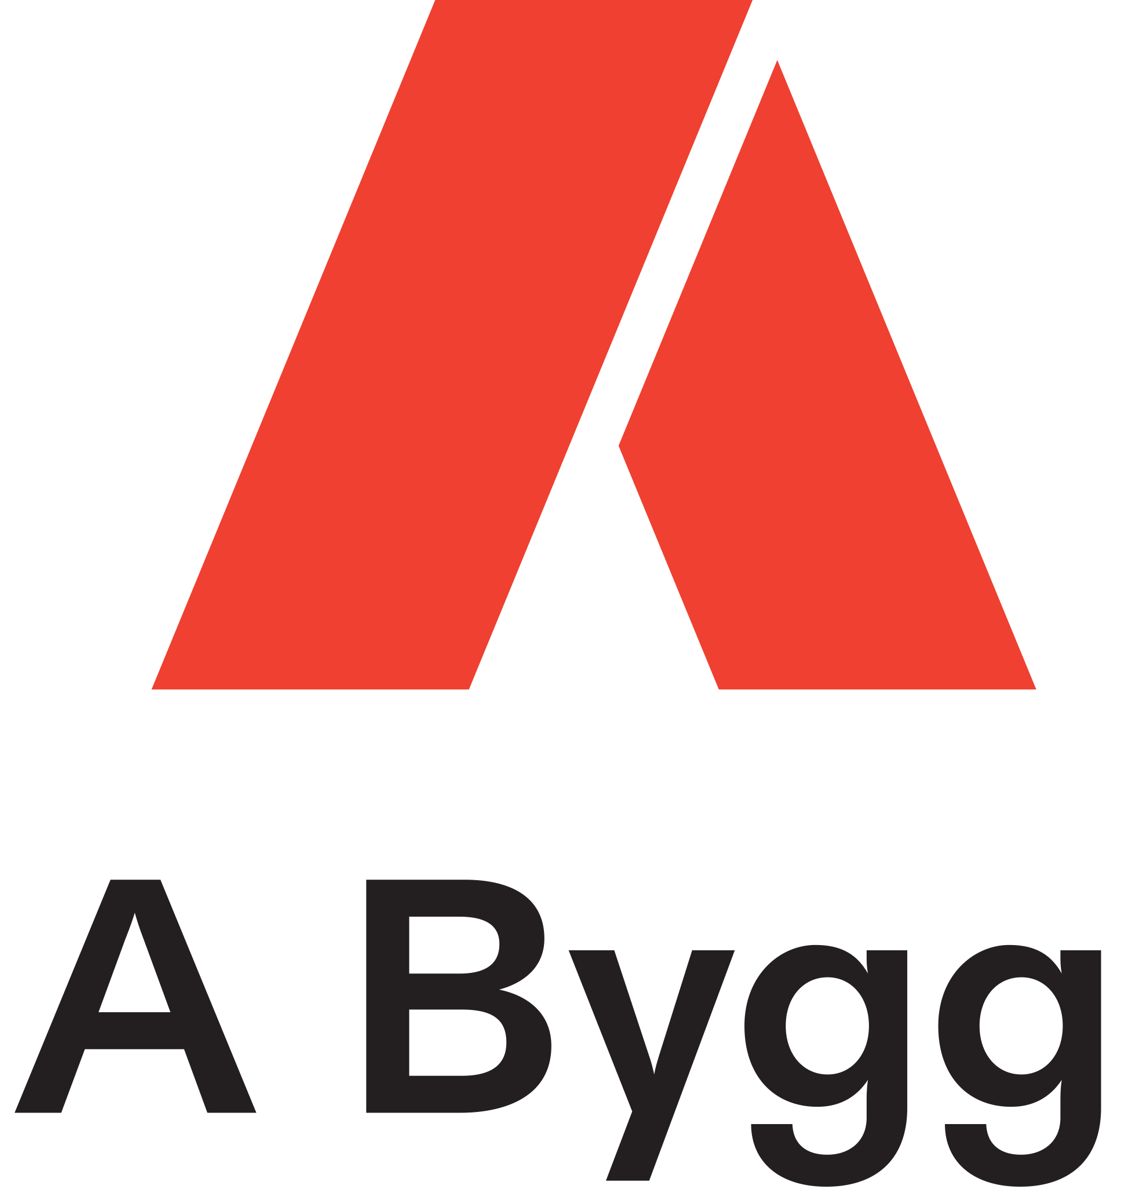 Abygglogo